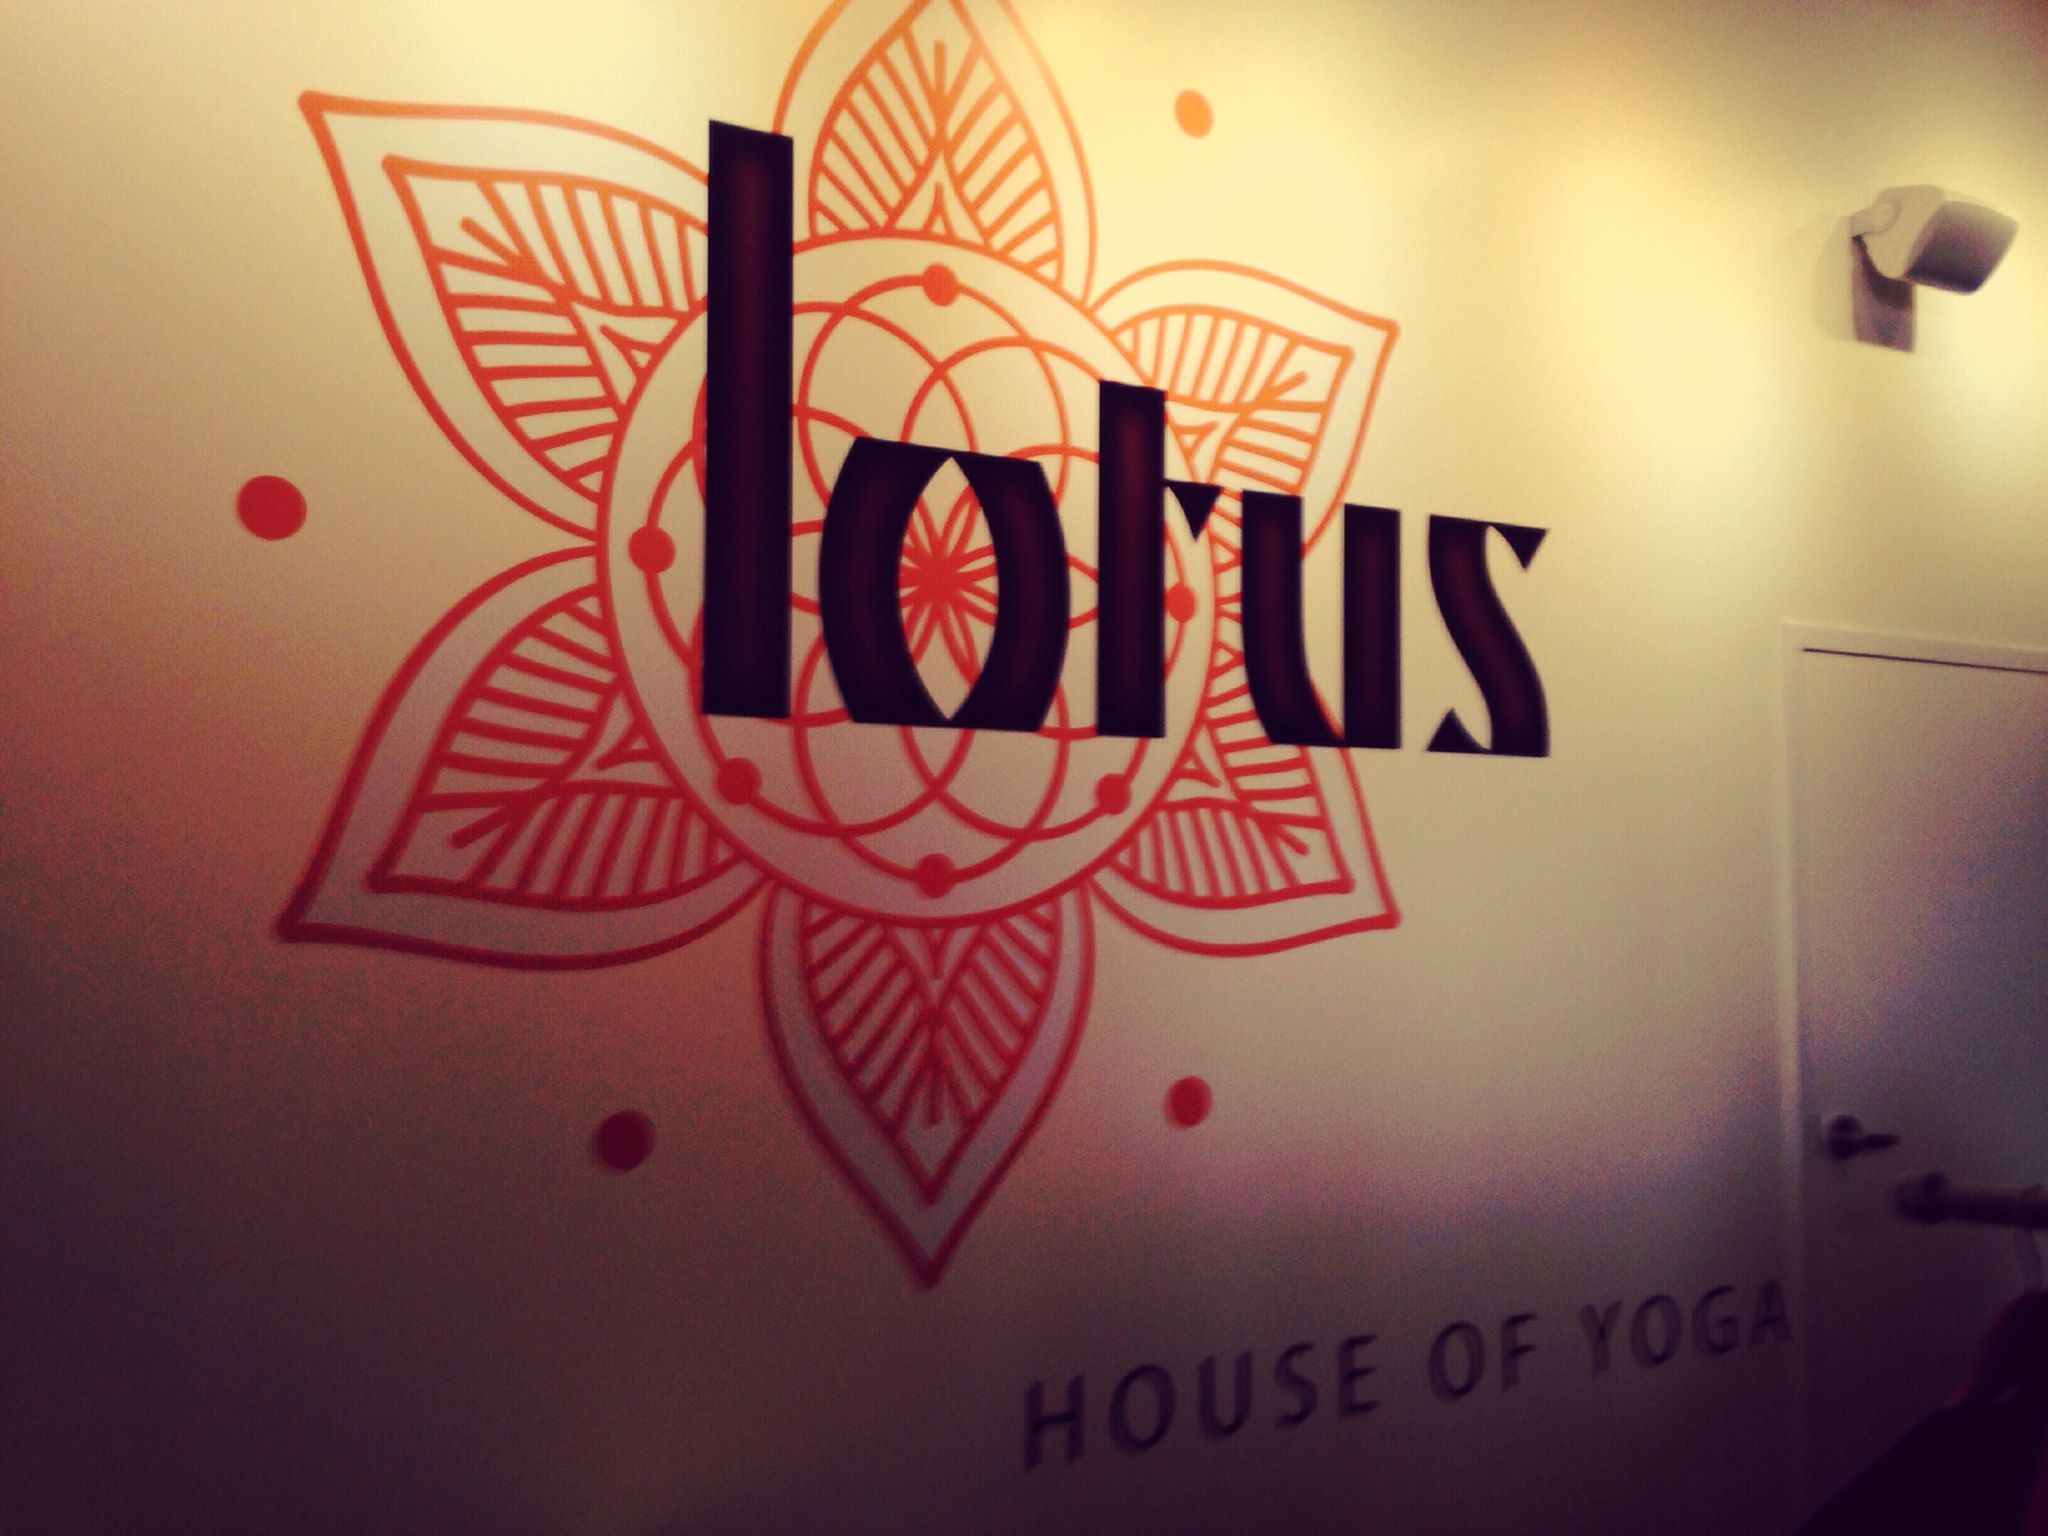 lotus house of yoga schedule